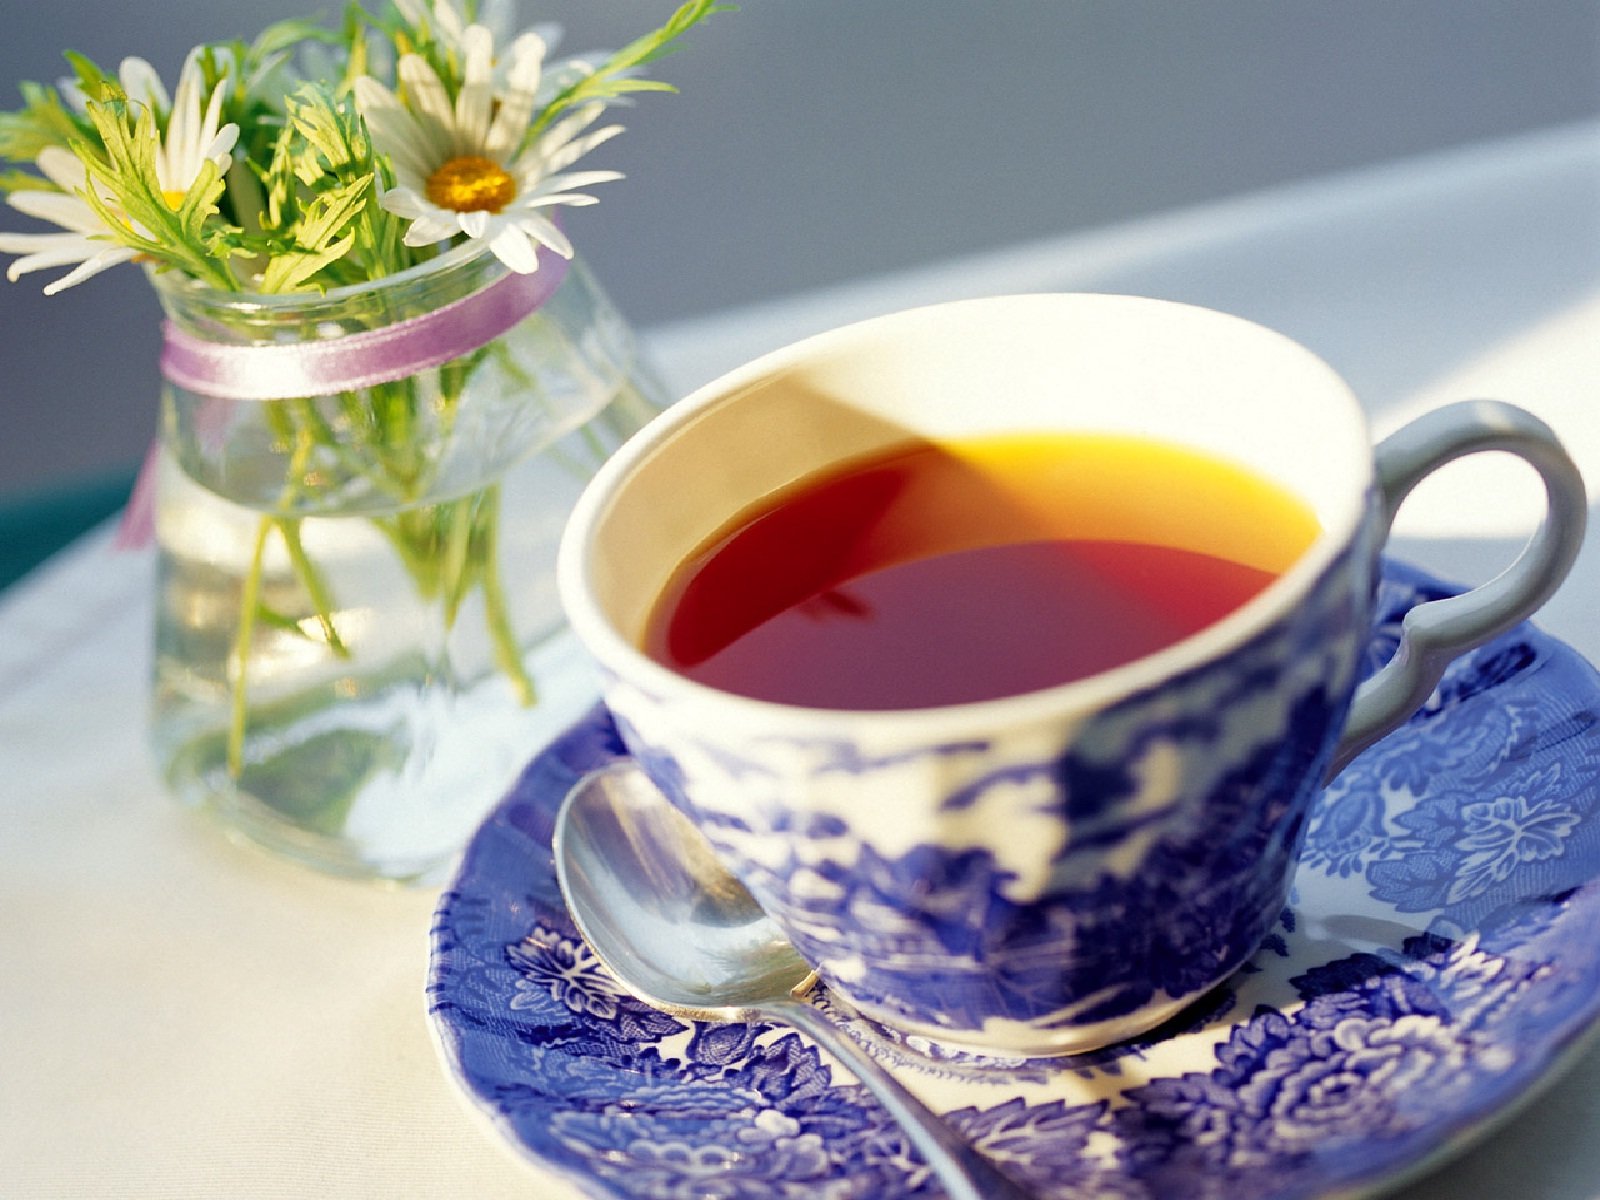 13 чашек чая. Чашечка чая. Кружка чай. Чашка с чаем. Утренний чай.